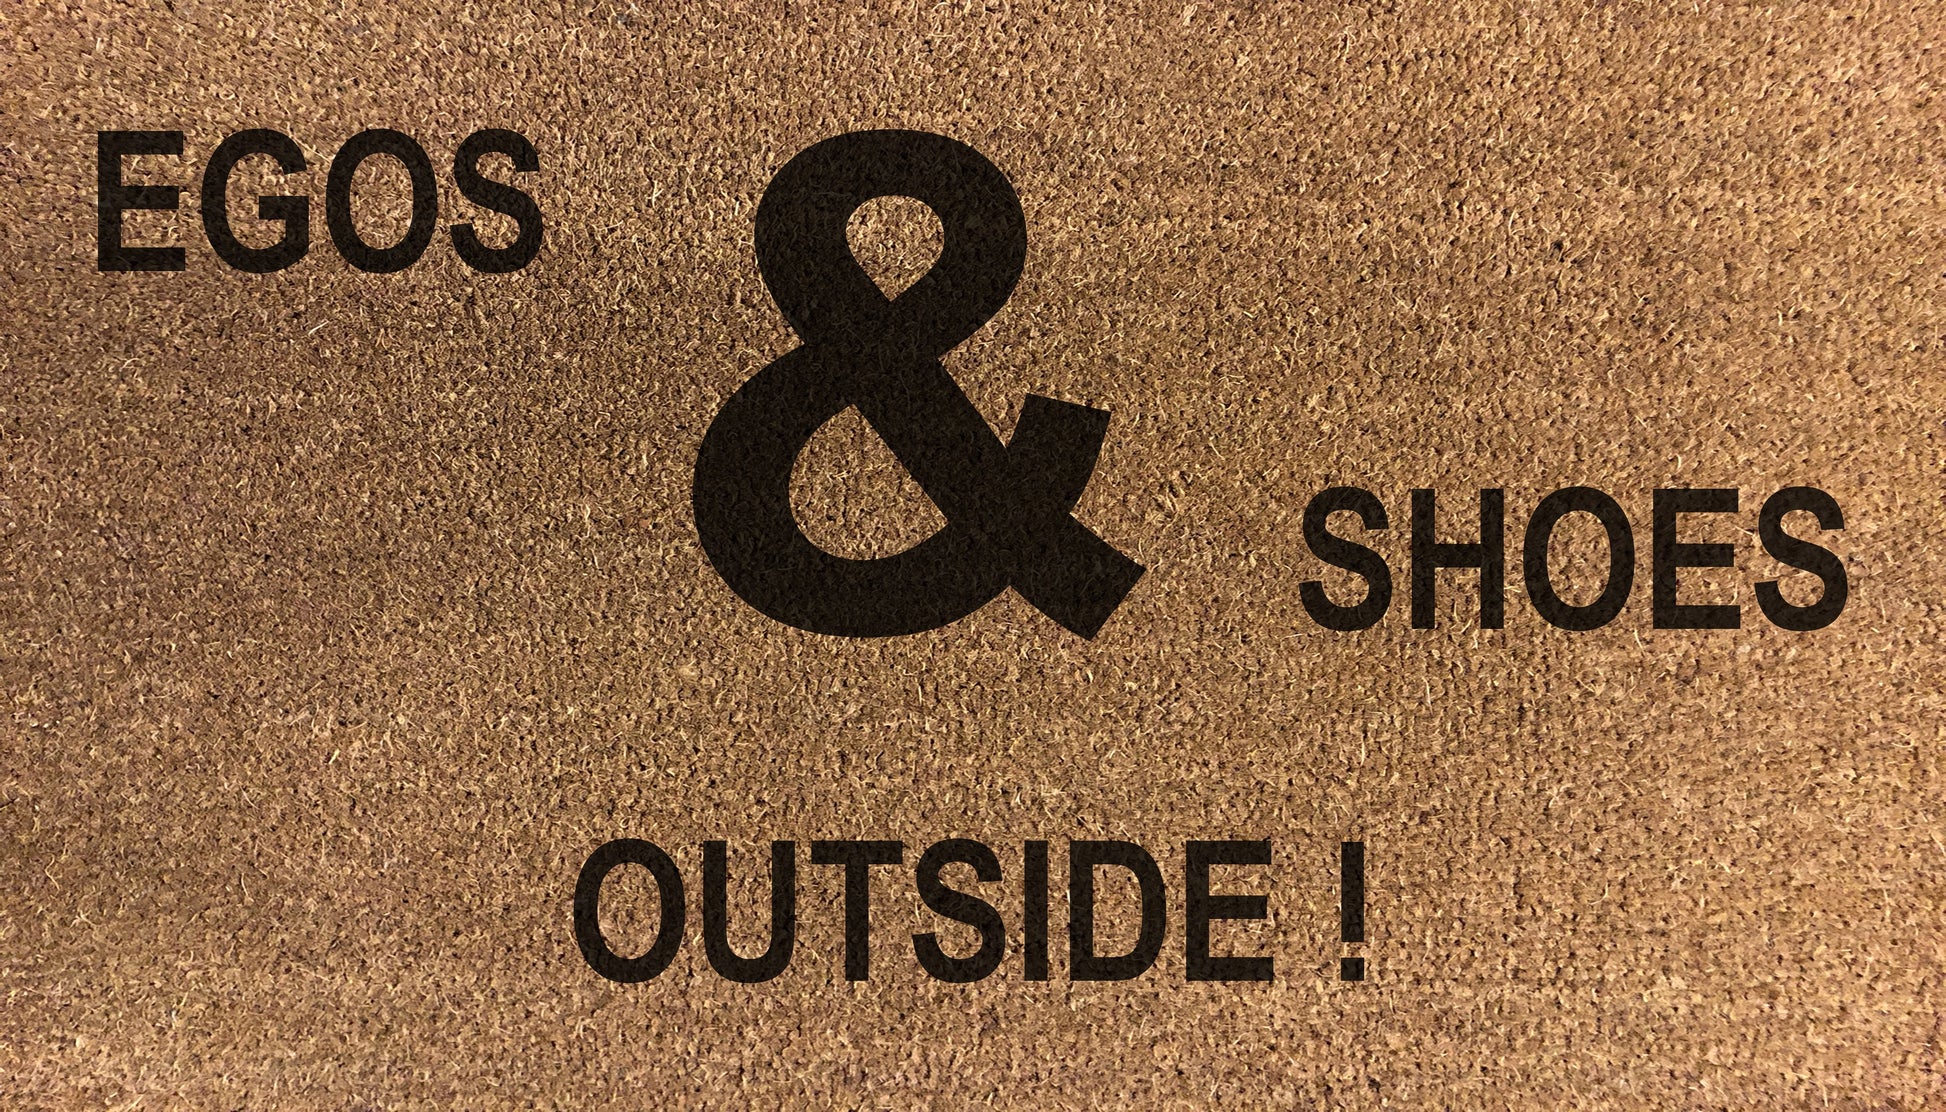 Egos & Shoes Outside! - DoormatsOnline